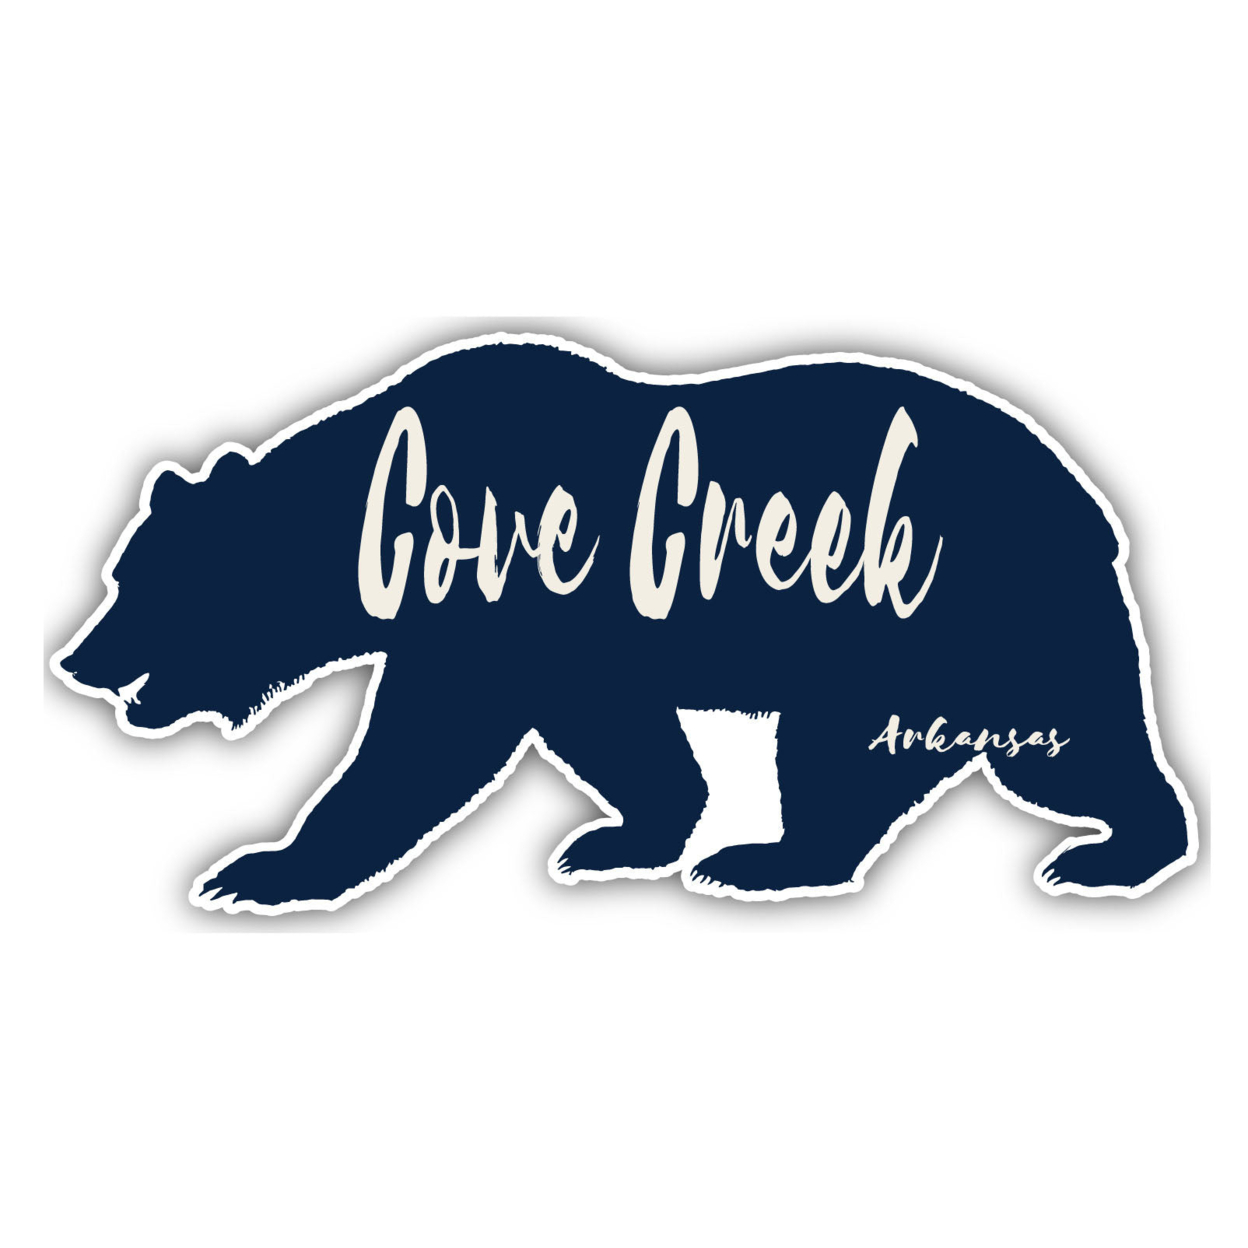 Cove Creek Arkansas Souvenir Decorative Stickers (Choose Theme And Size) - Single Unit, 6-Inch, Bear